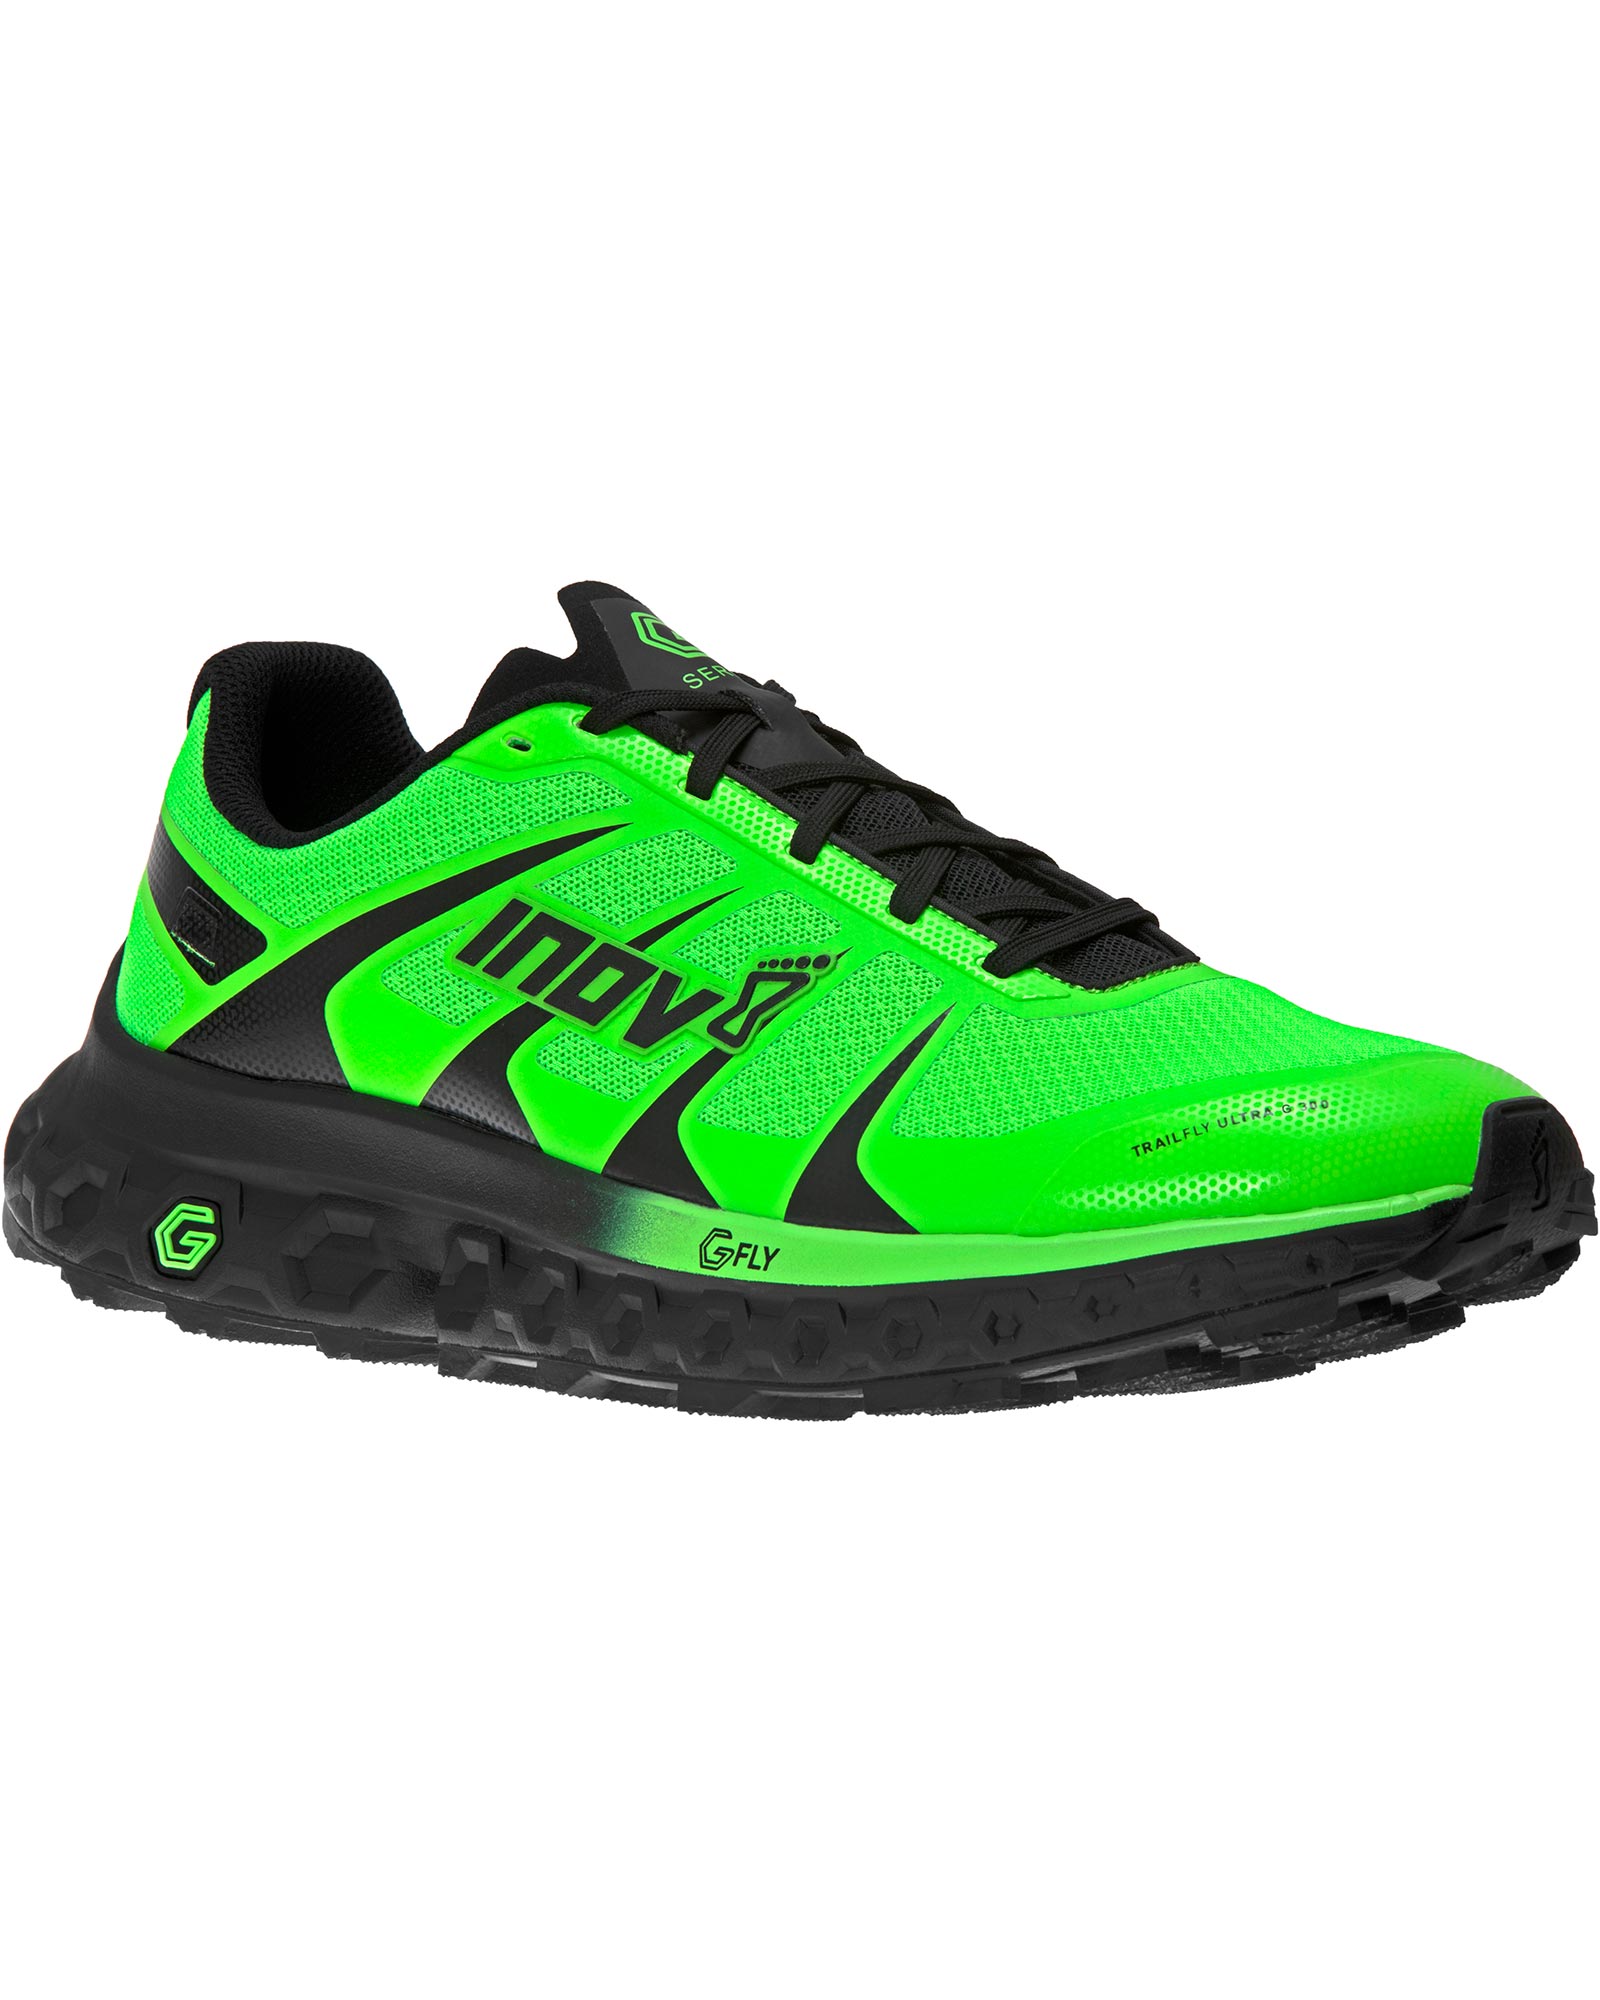 Inov 8 TrailFly Ultra G 300 Max Men’s Shoes - Green/Black UK 7